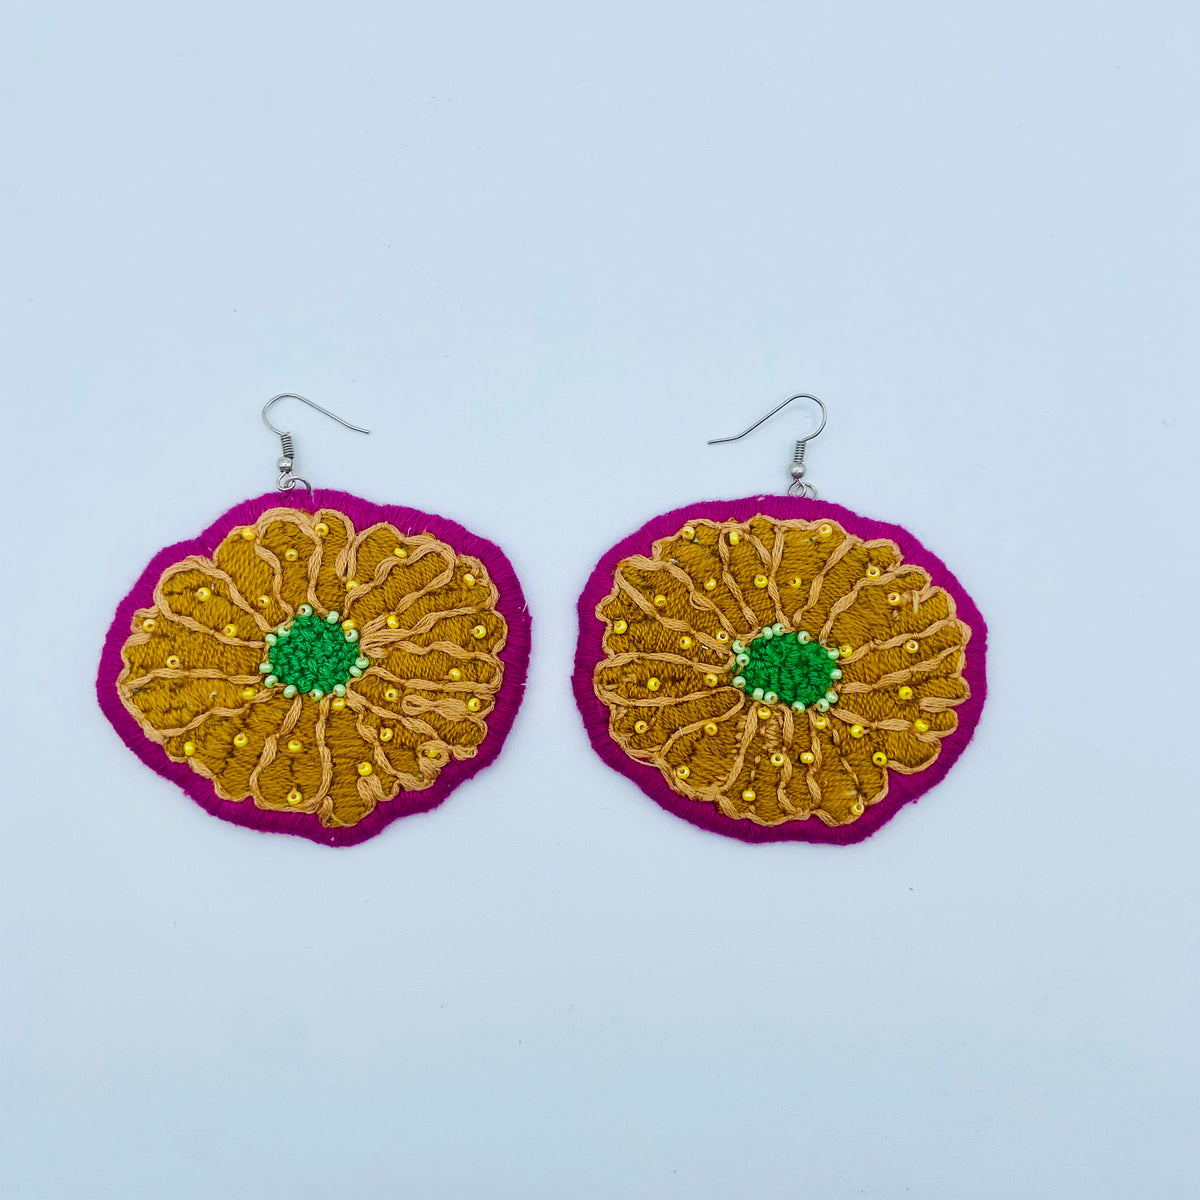 Embroidered Flower Earrings